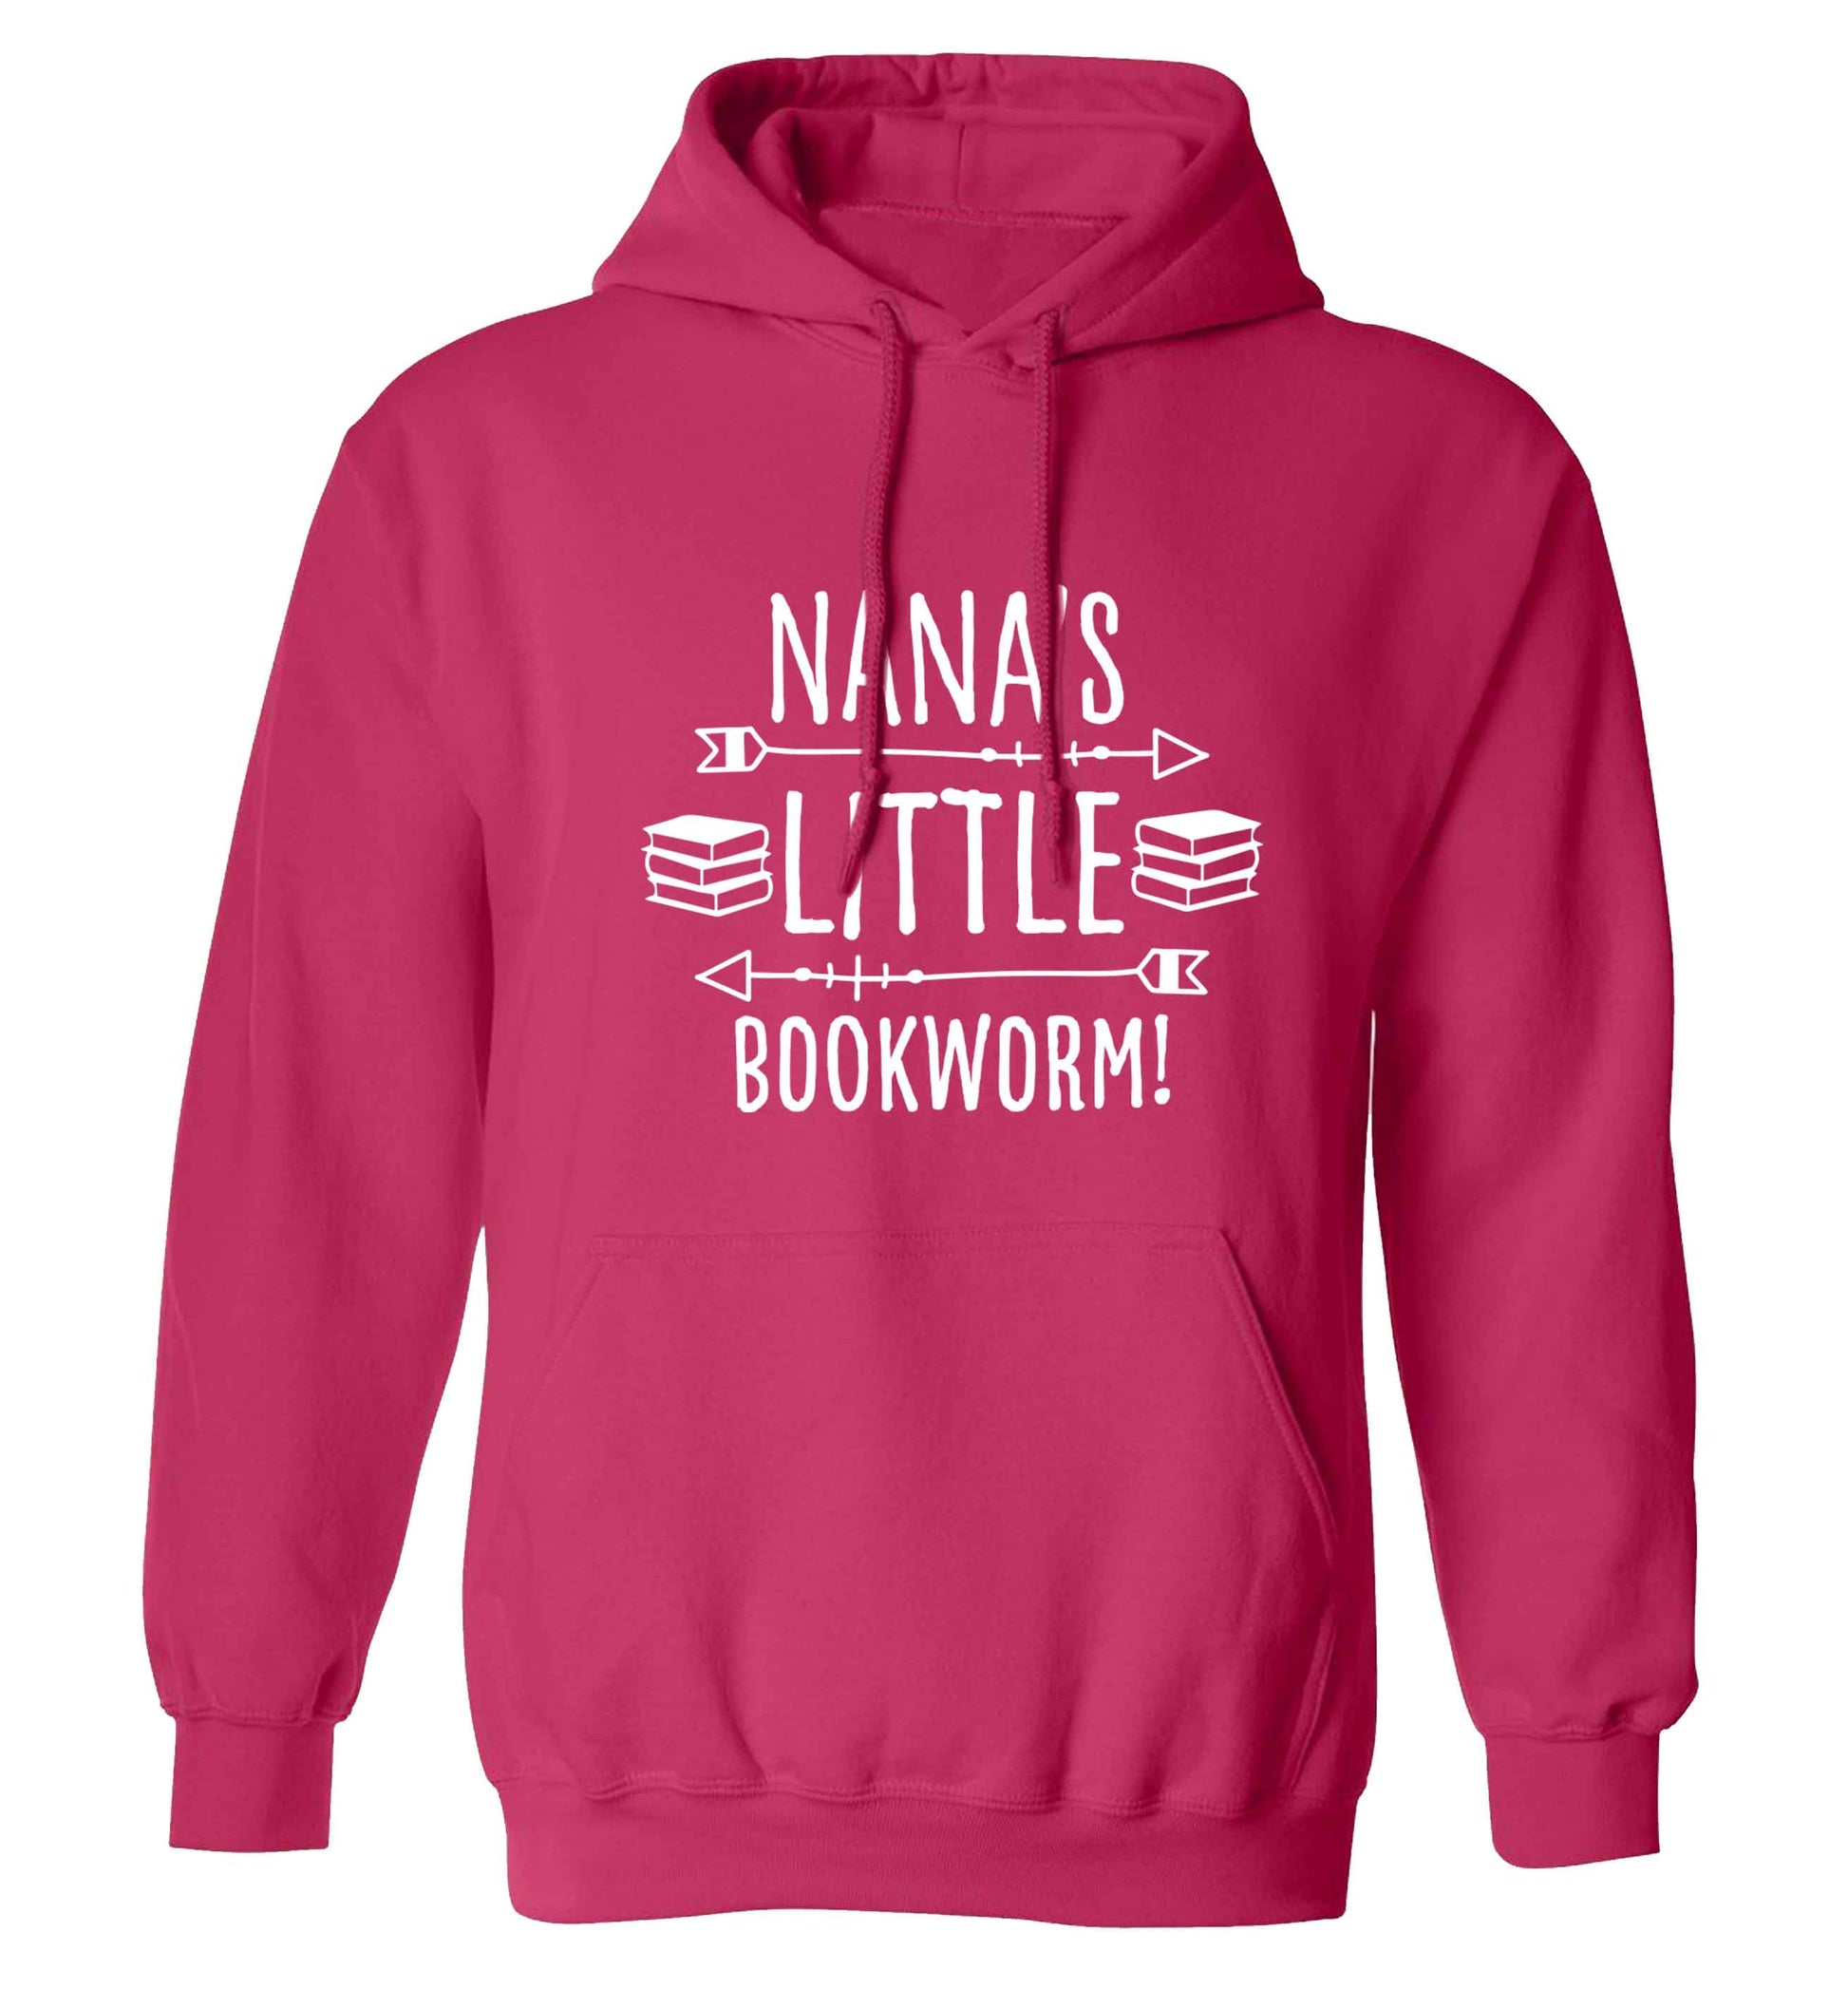 Nana's little bookworm adults unisex pink hoodie 2XL